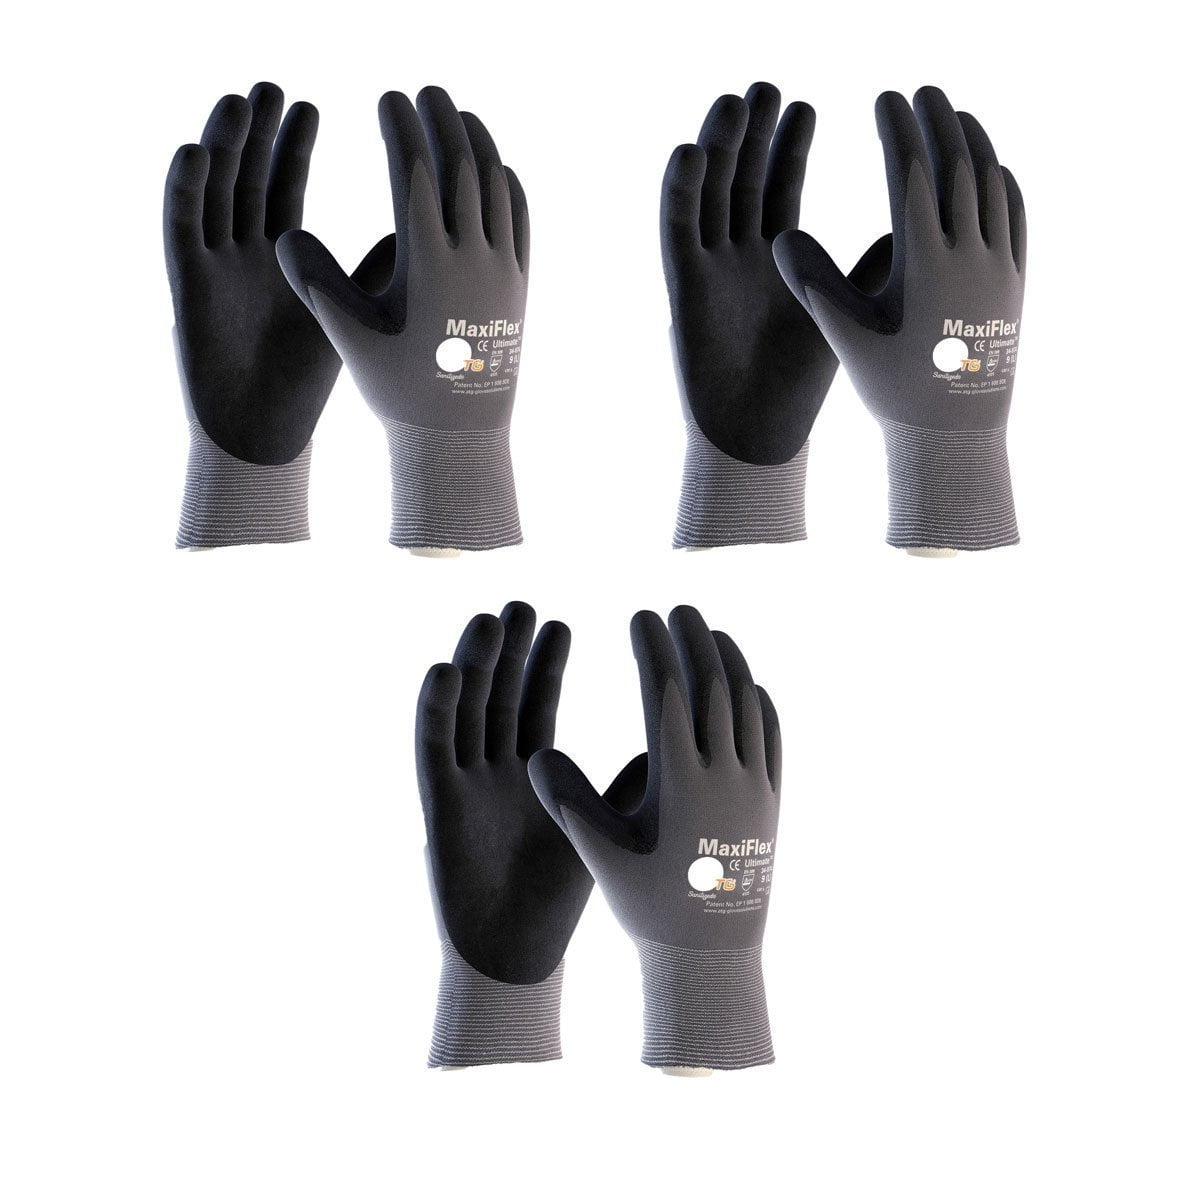 PIP 34-874/XS ATG Maxiflex Ulitimate G-Tek Foam Nitrile Coated Work Glove 1 Pair 